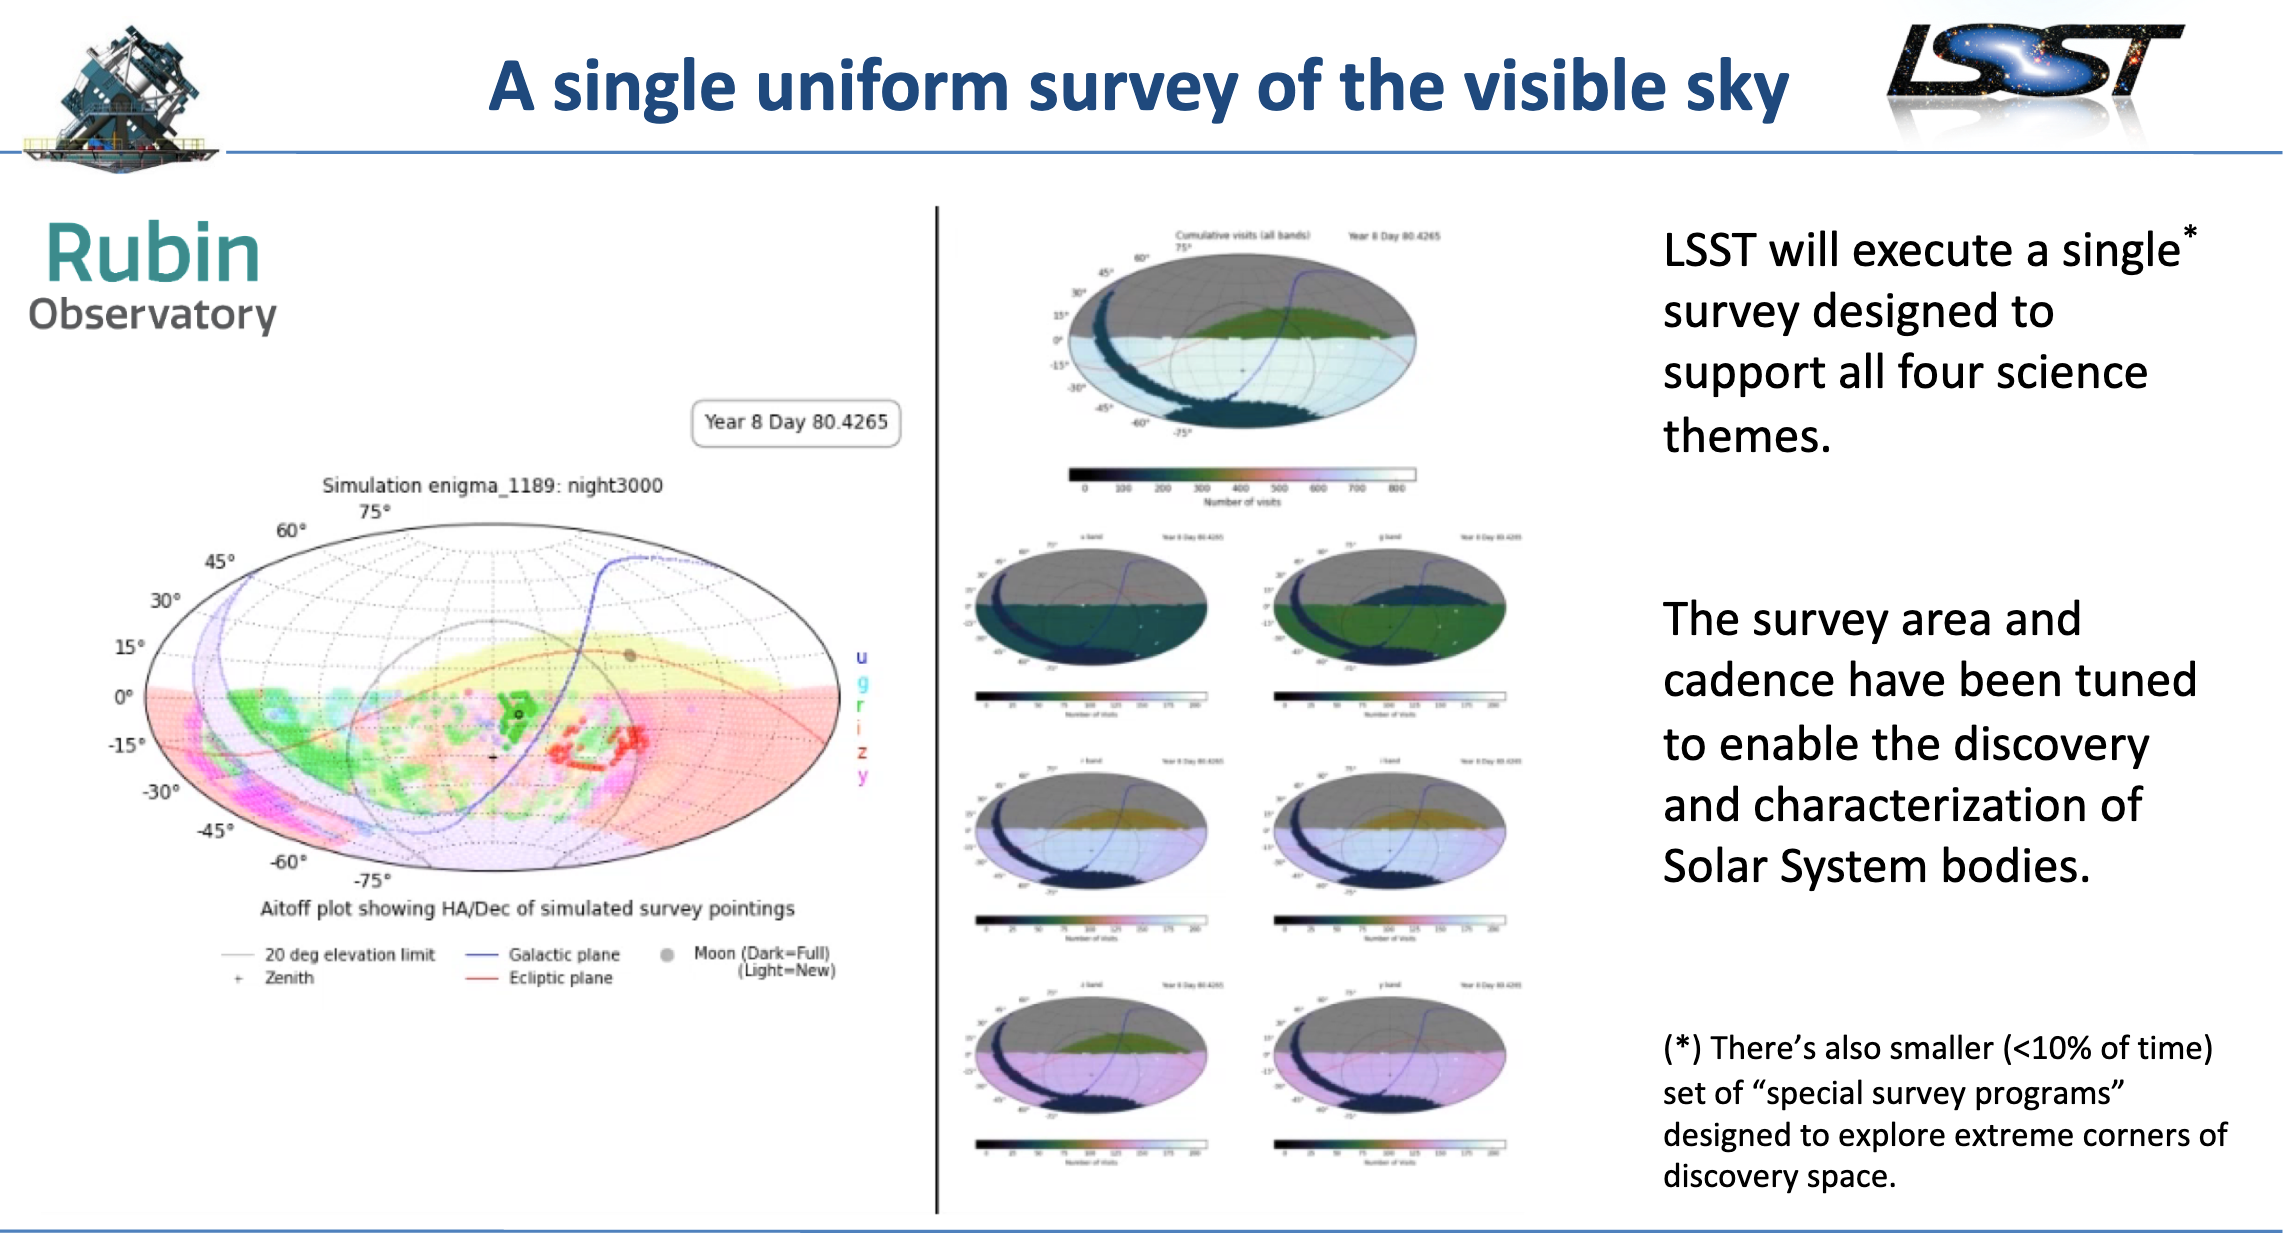 Summary of the LSST cadence figure